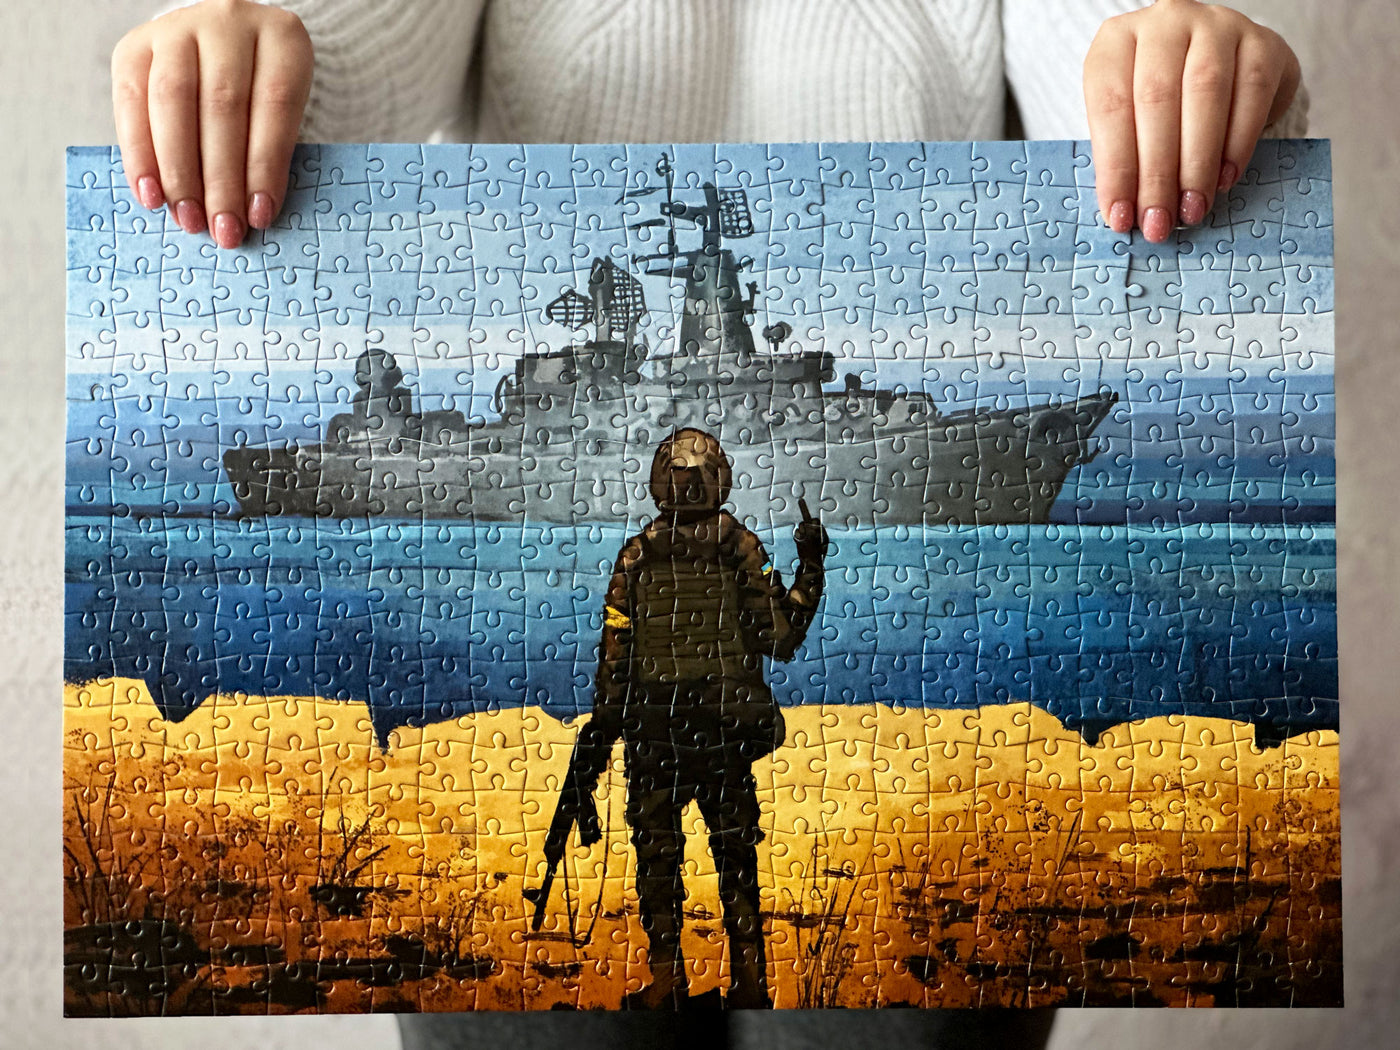 Russian warship, go...!